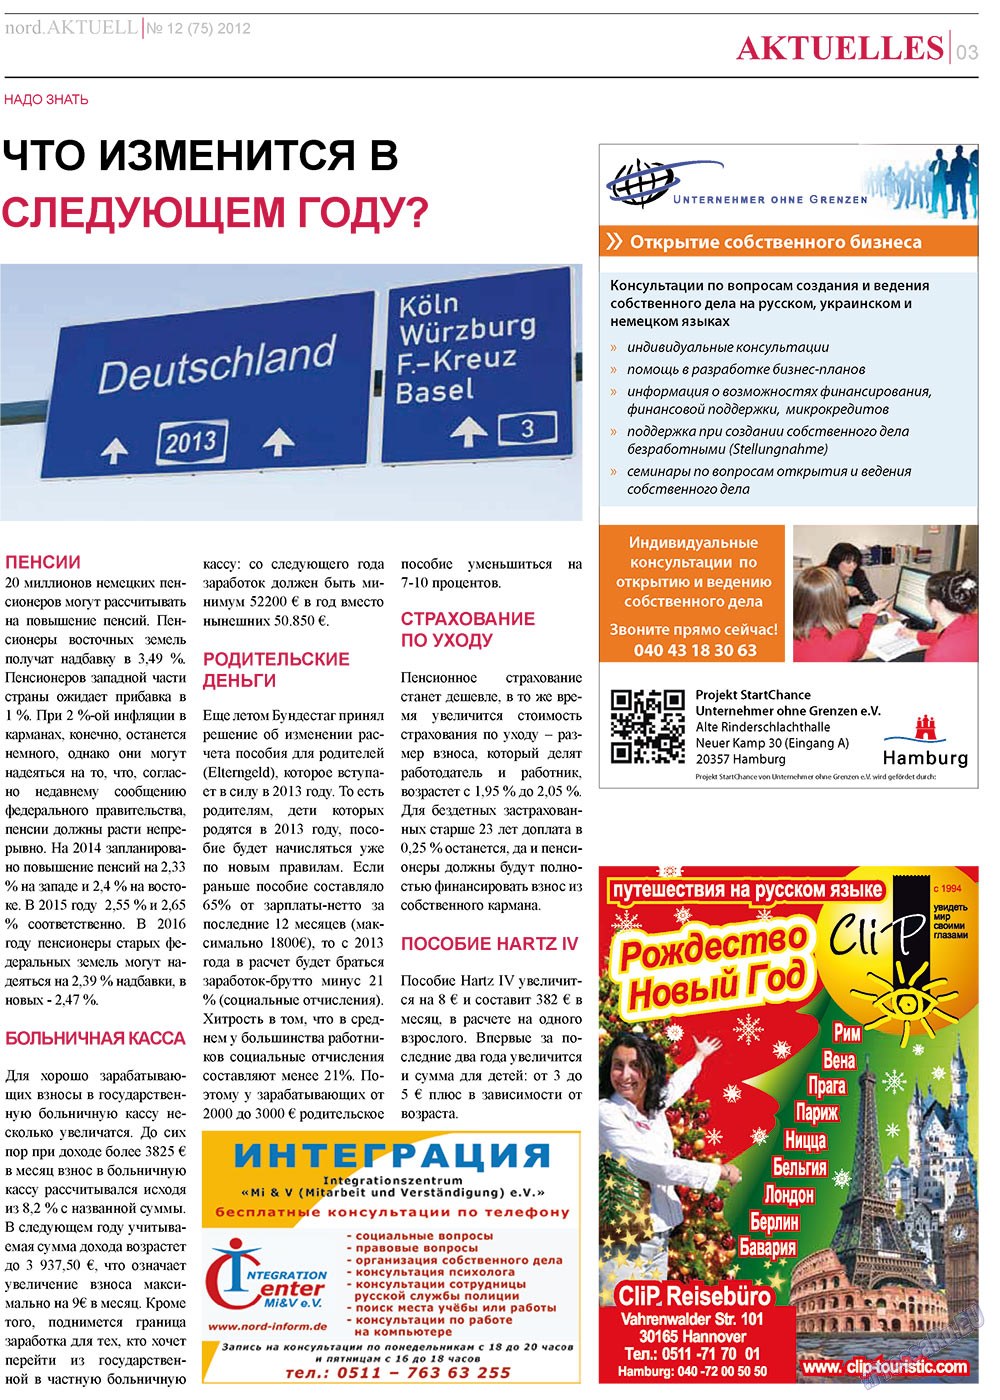 nord.Aktuell, газета. 2012 №12 стр.3